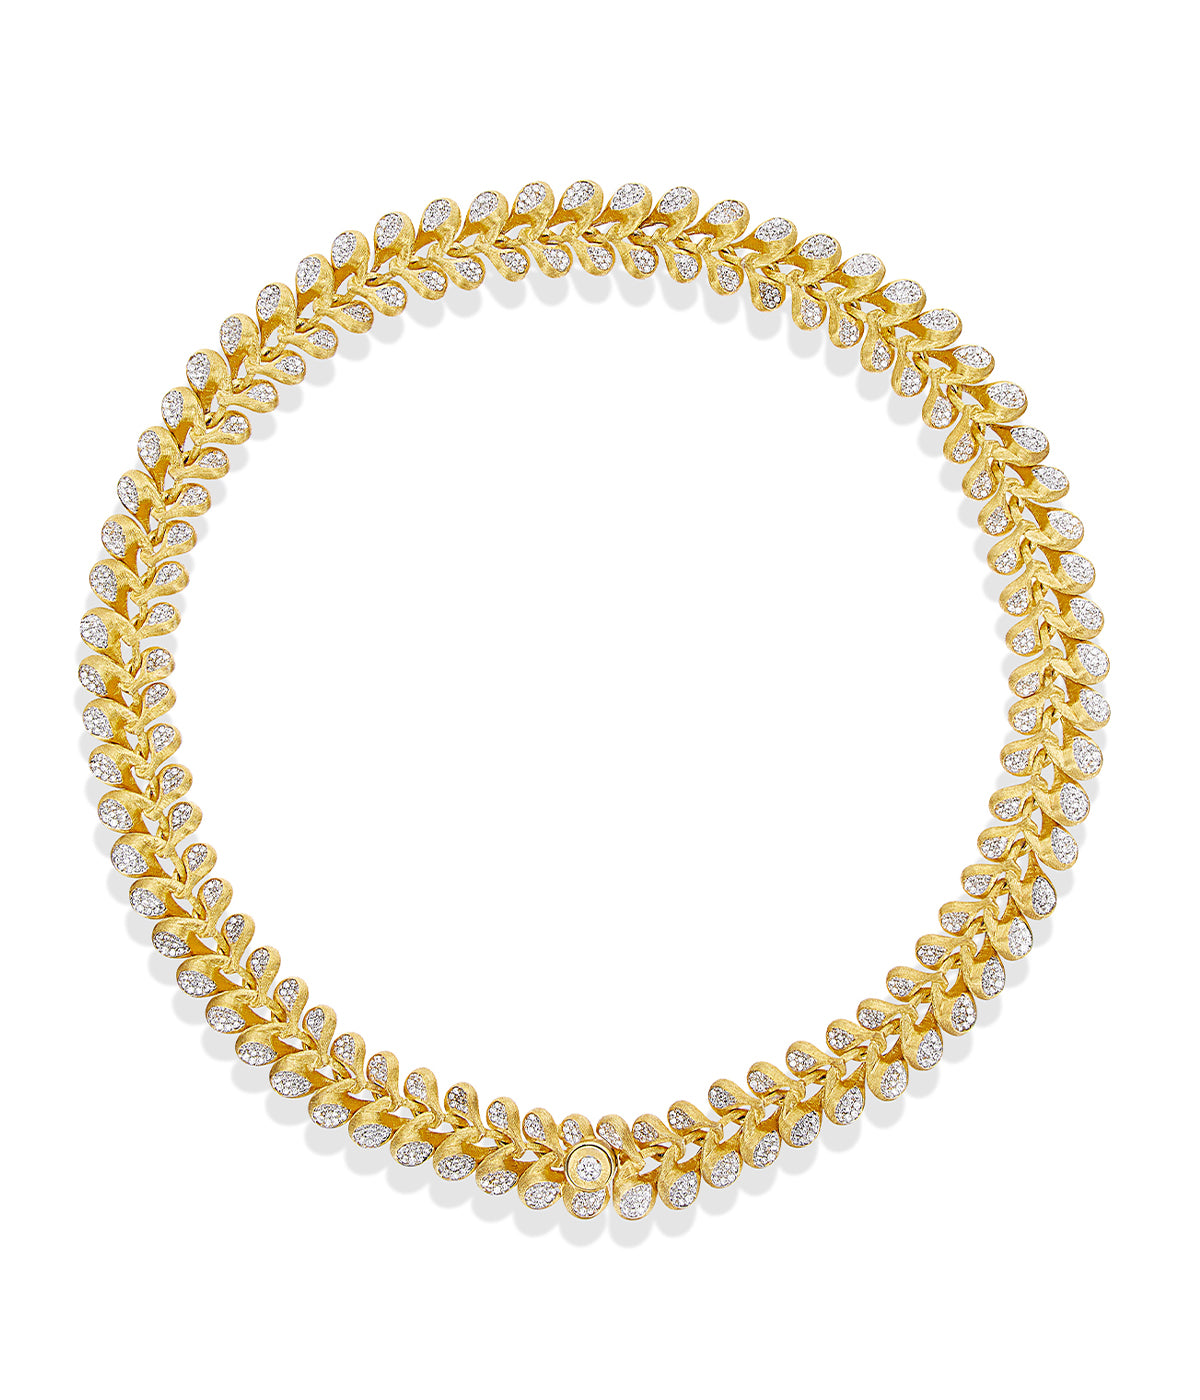 "Trasformista" Gold and Diamonds statement necklace